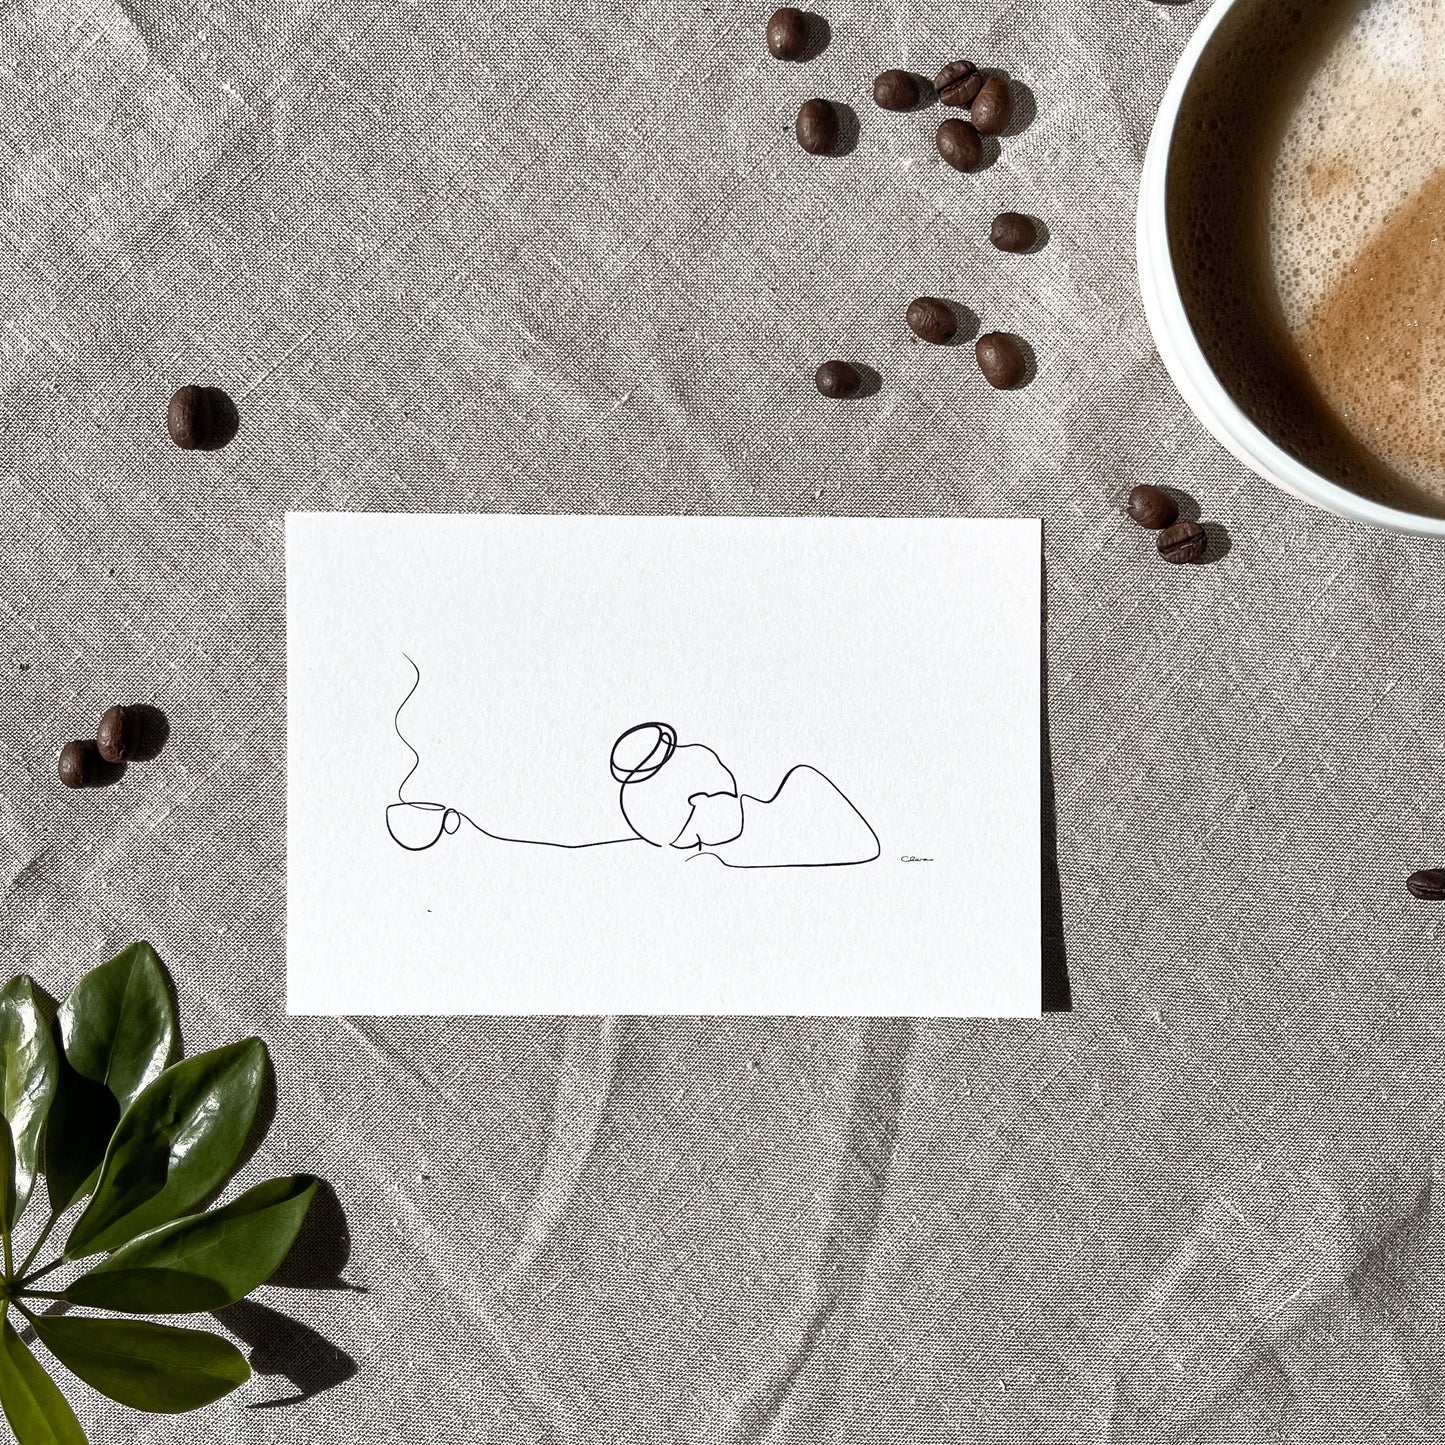 Kaffee oder Tee? Nr. 5-JUDITH CLARA-15x10 cm (zartweiß) Papier 300g-one-line-art